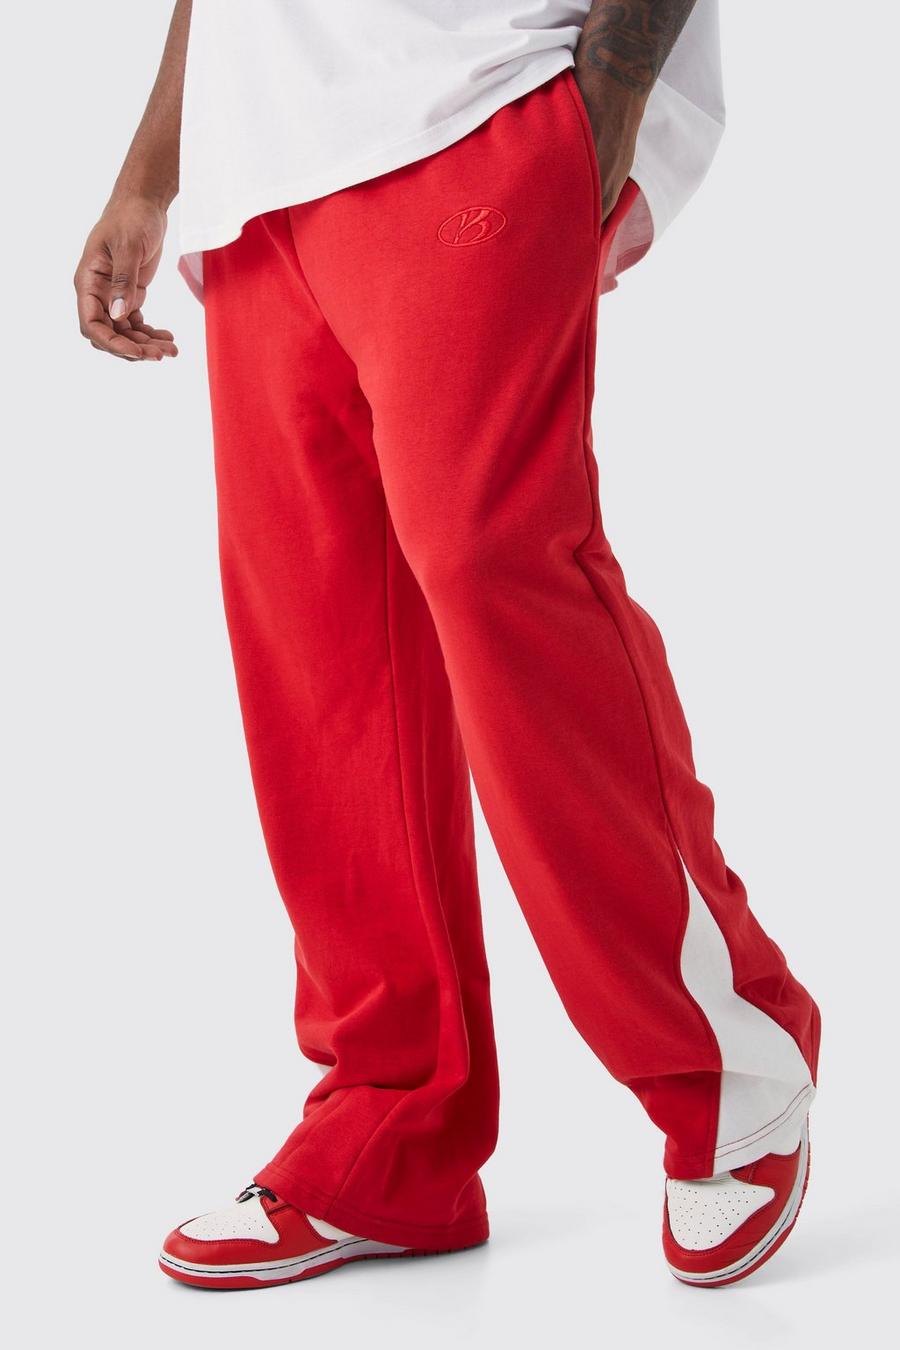 Pantalón deportivo Plus Regular grueso con refuerzos sin acabar, Red